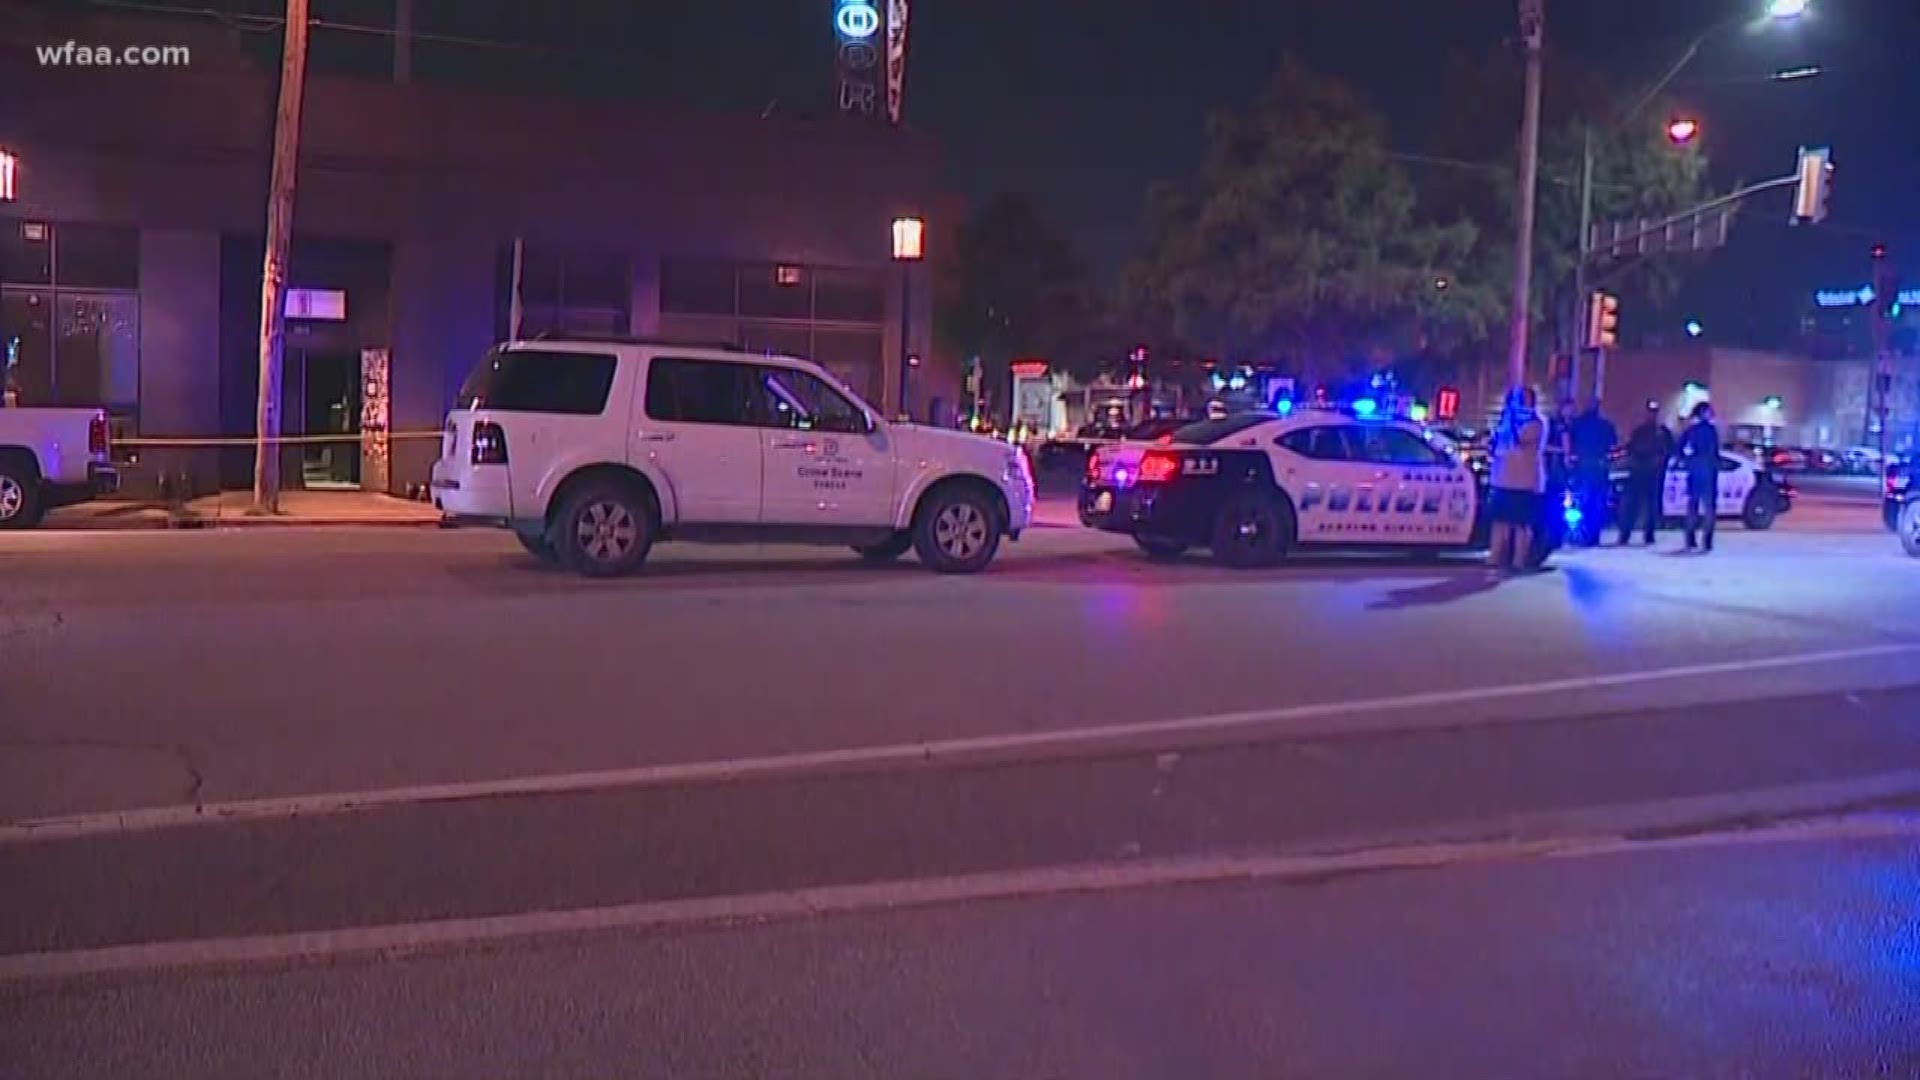 The shooting happened near The Door club on Main Street, police said.